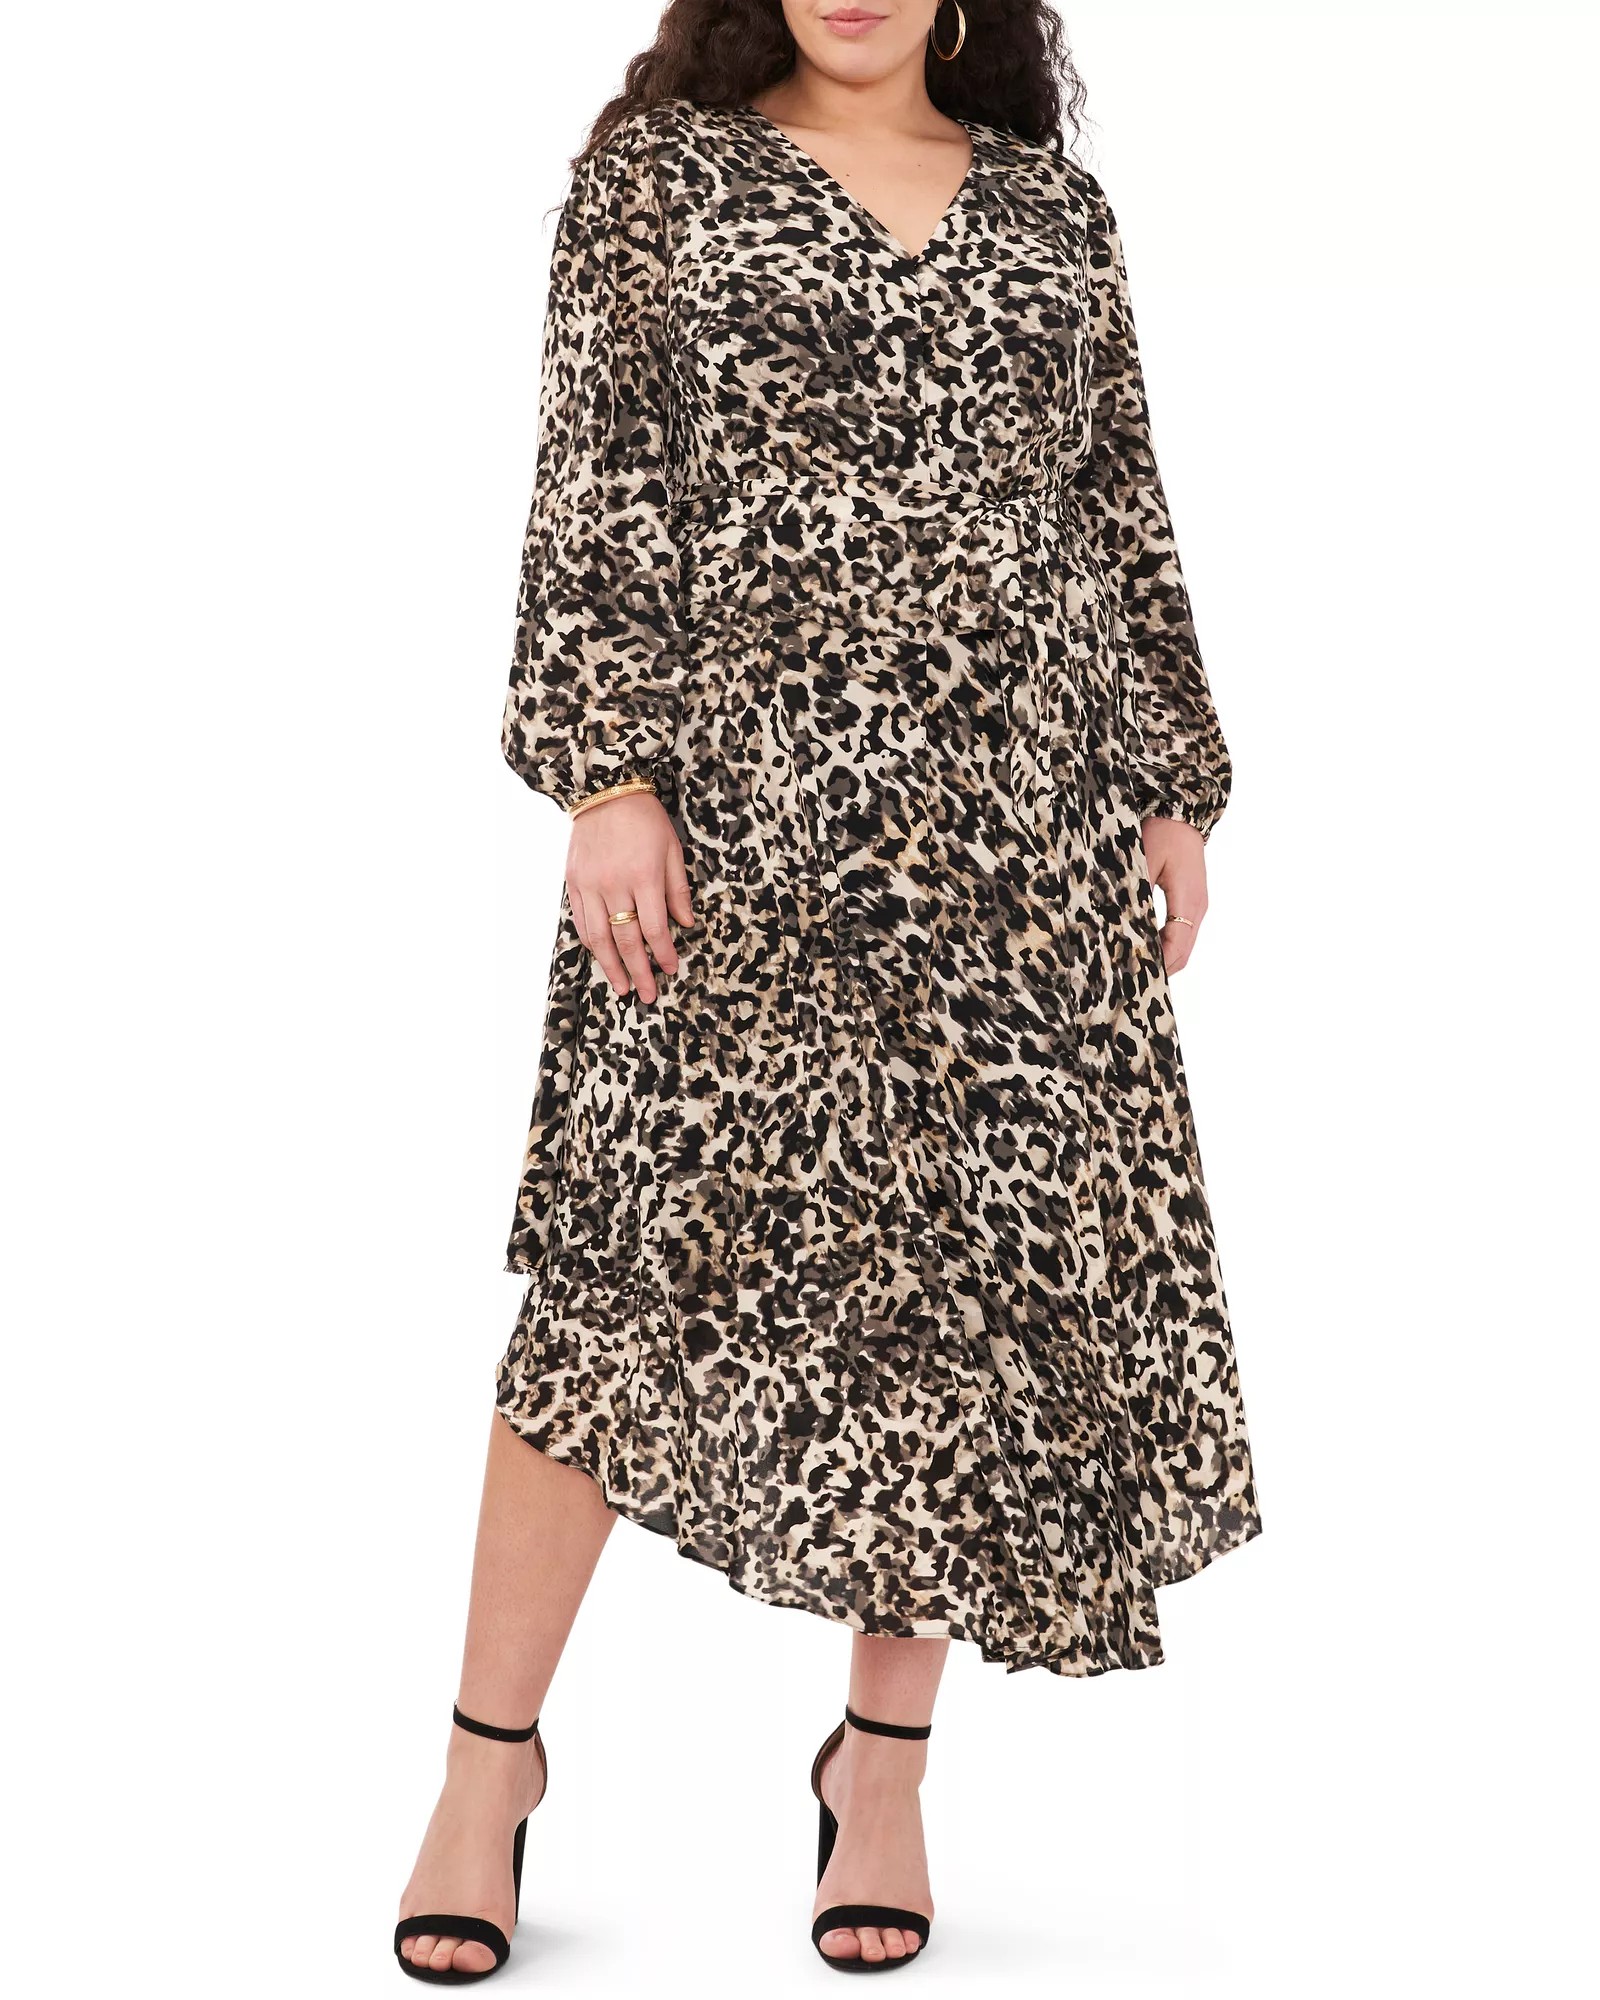 Hotd Leopard Eyes Strappy Asymmetrical Dress With Leopard Lace